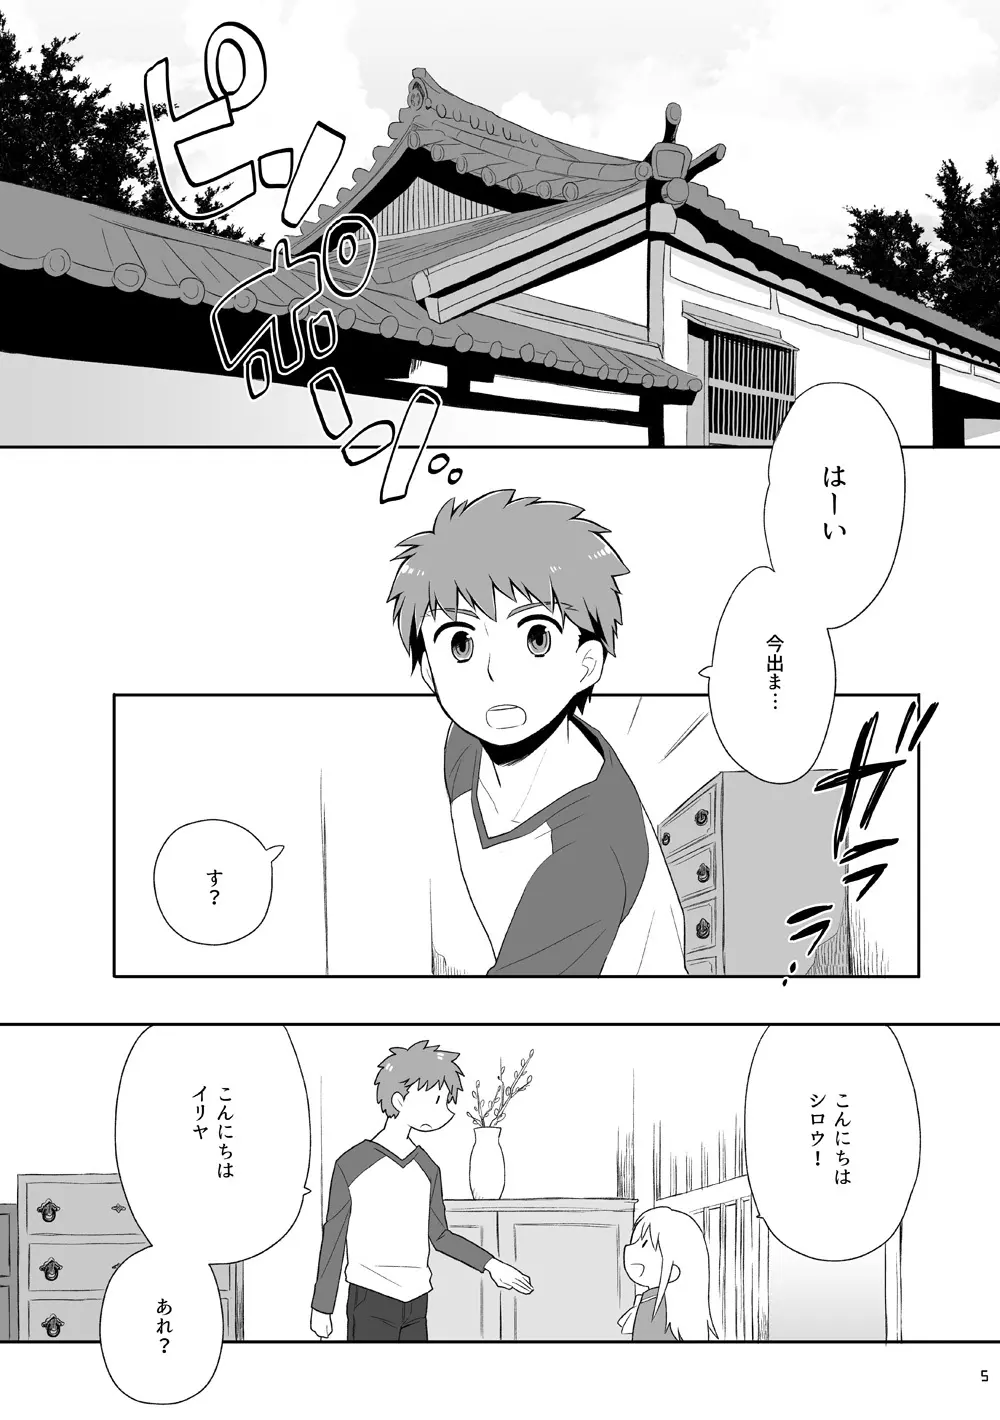 弓士本 - page4